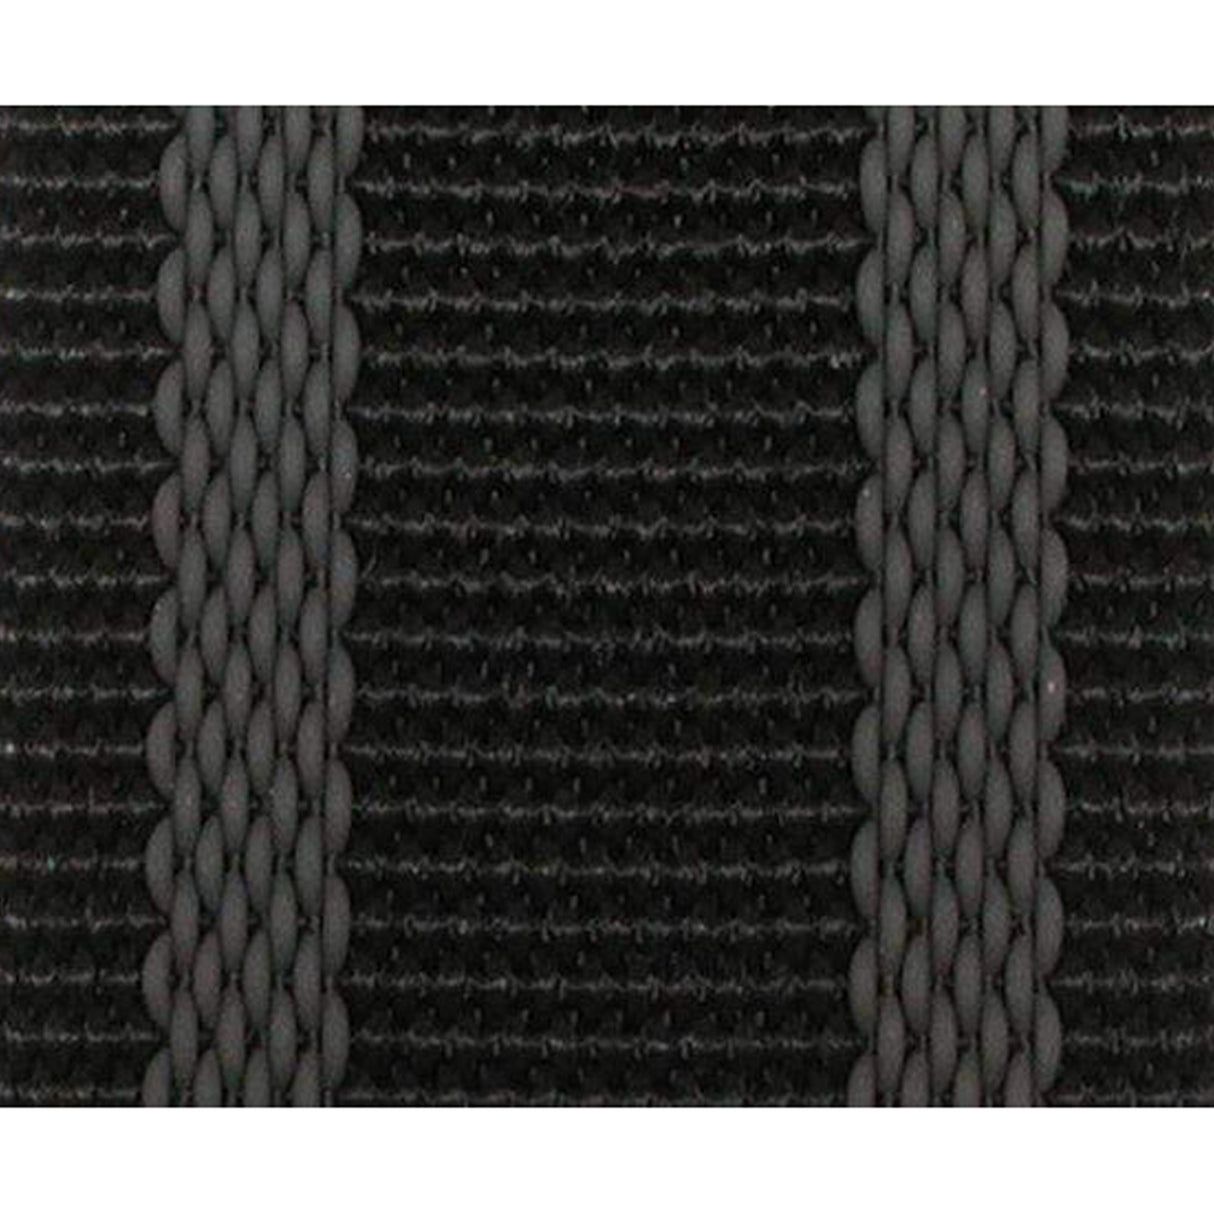 2" Black with Rubber Grip Strips, Web Strap, Polypropylene, #12-2-PWR